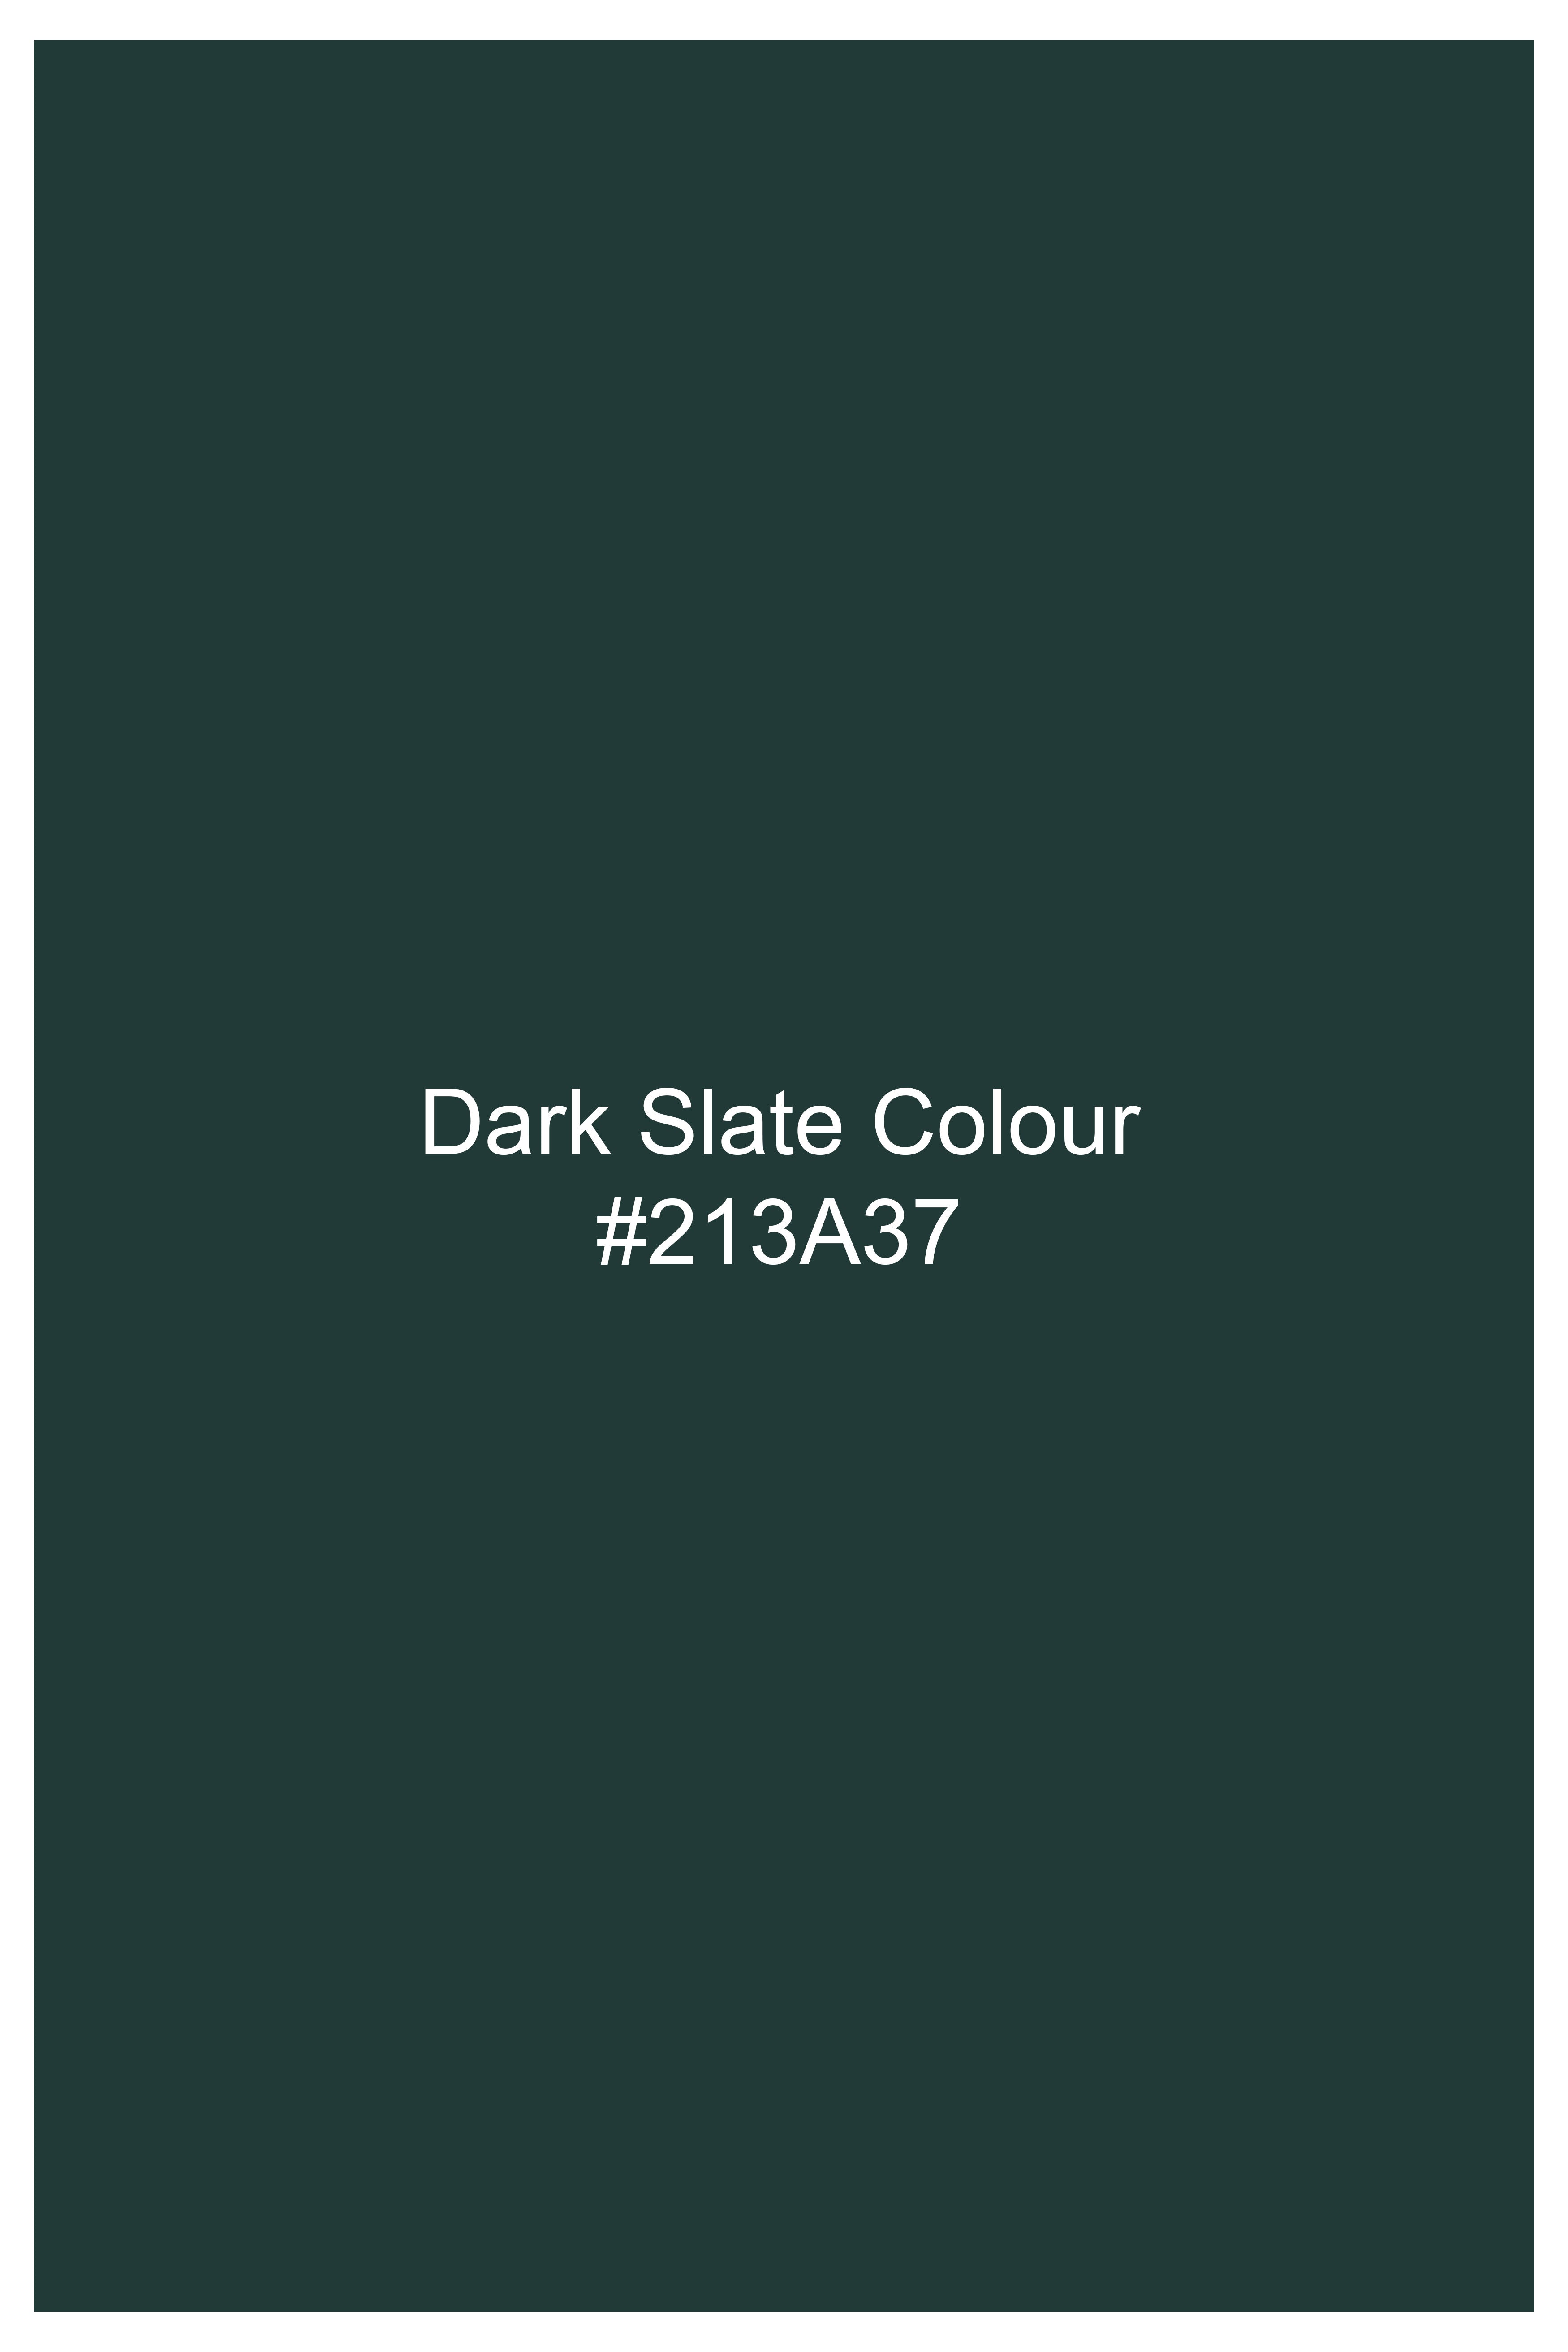 Dark Slate Green Premium Cotton Double Breasted Suit ST2739-DB-36,ST2739-DB-38,ST2739-DB-40,ST2739-DB-42,ST2739-DB-44,ST2739-DB-46,ST2739-DB-48,ST2739-DB-50,ST2739-DB-52,ST2739-DB-54,ST2739-DB-56,ST2739-DB-58,ST2739-DB-60